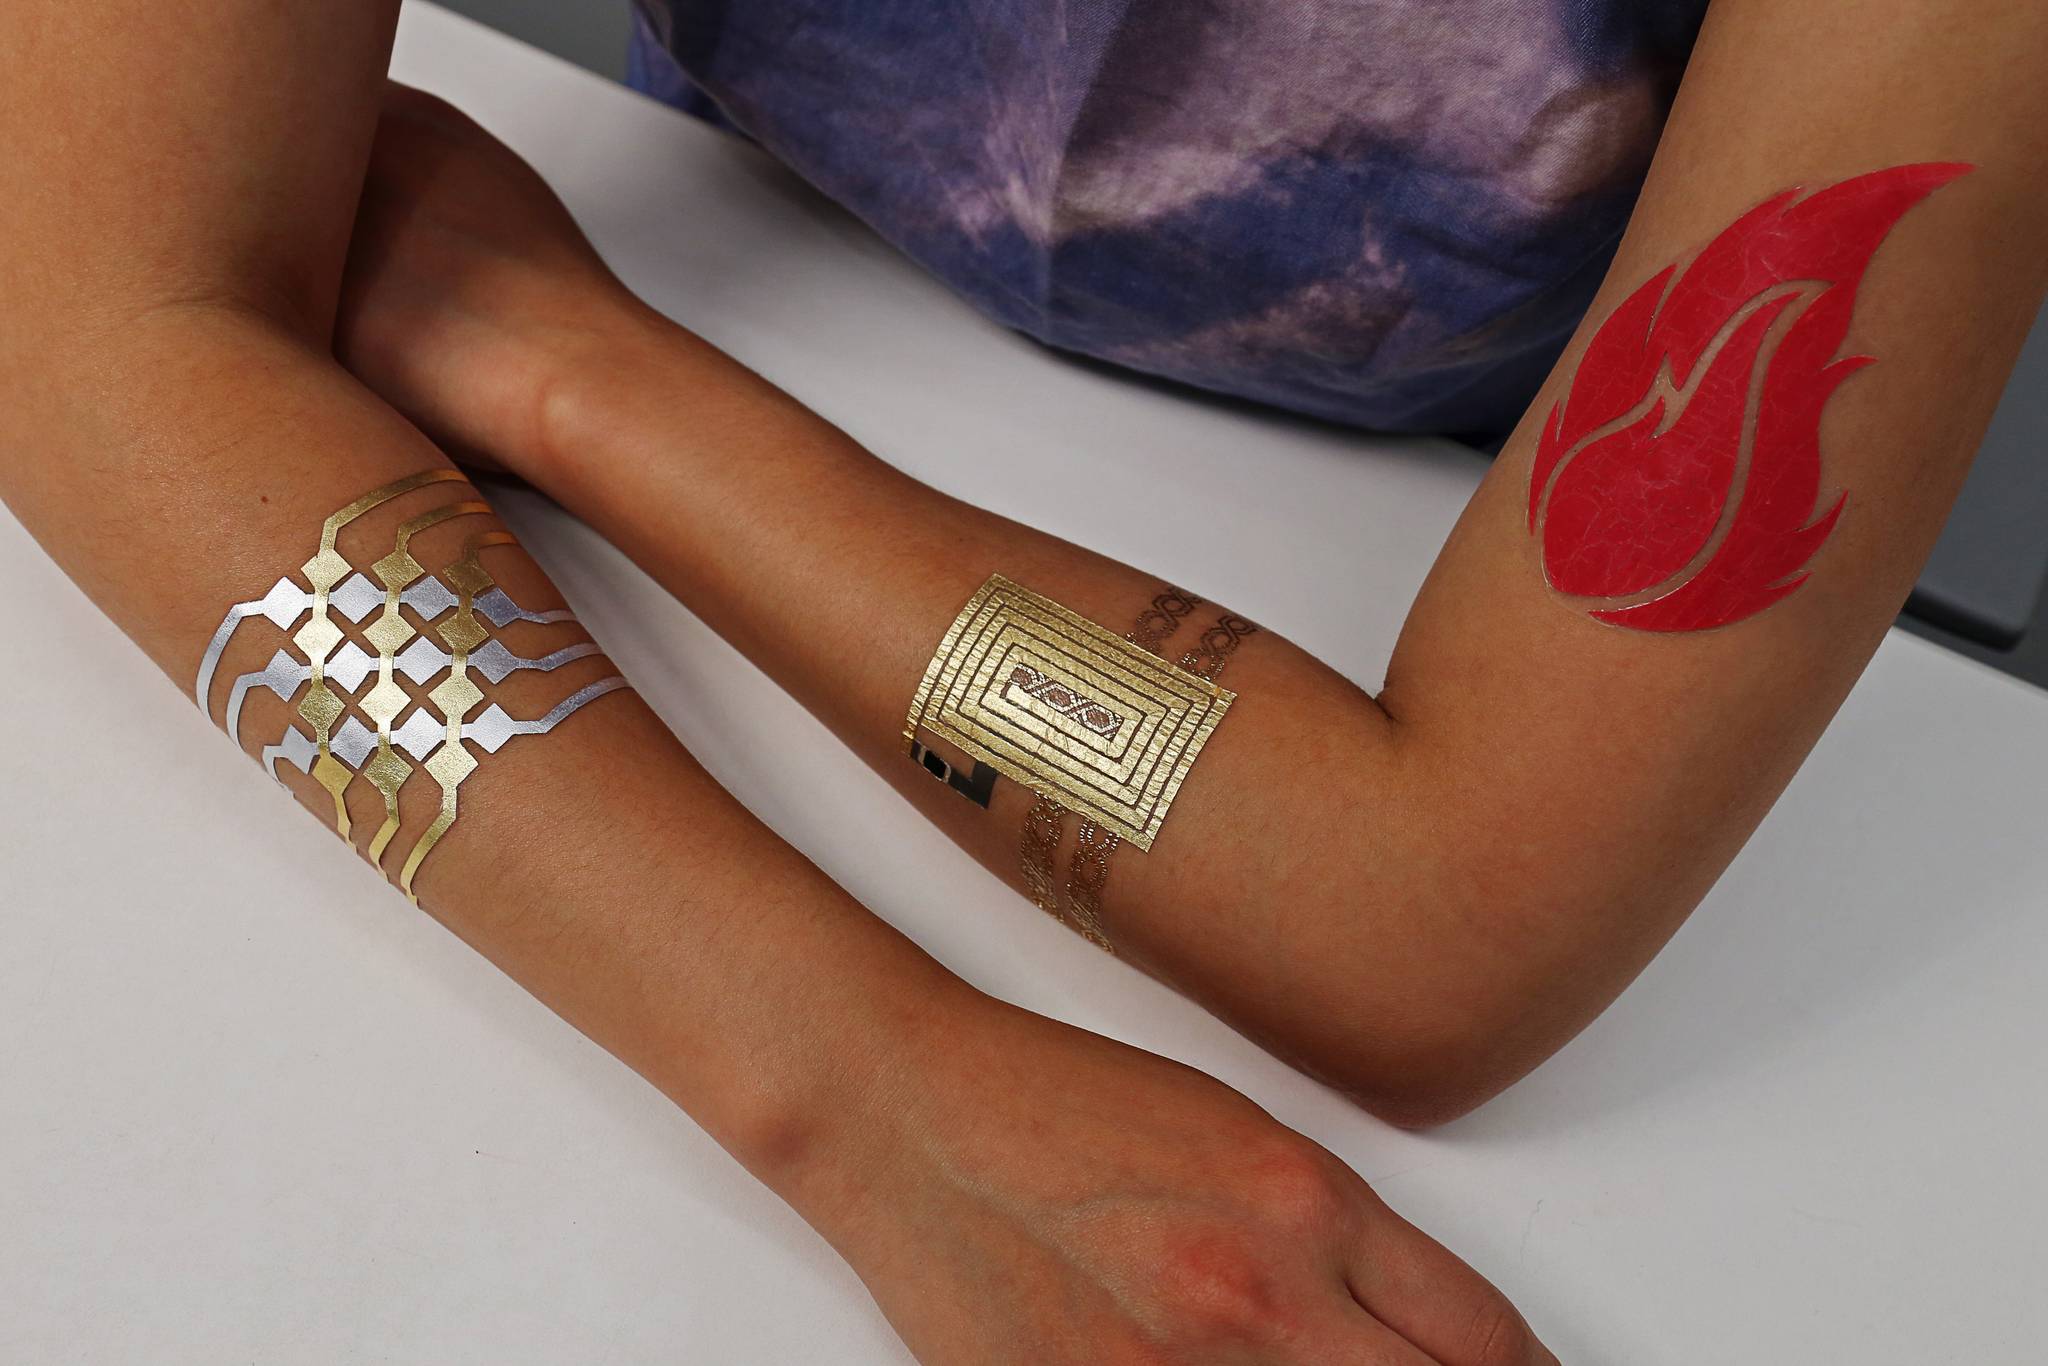 DuoSkin: temporary tattoos go high-tech